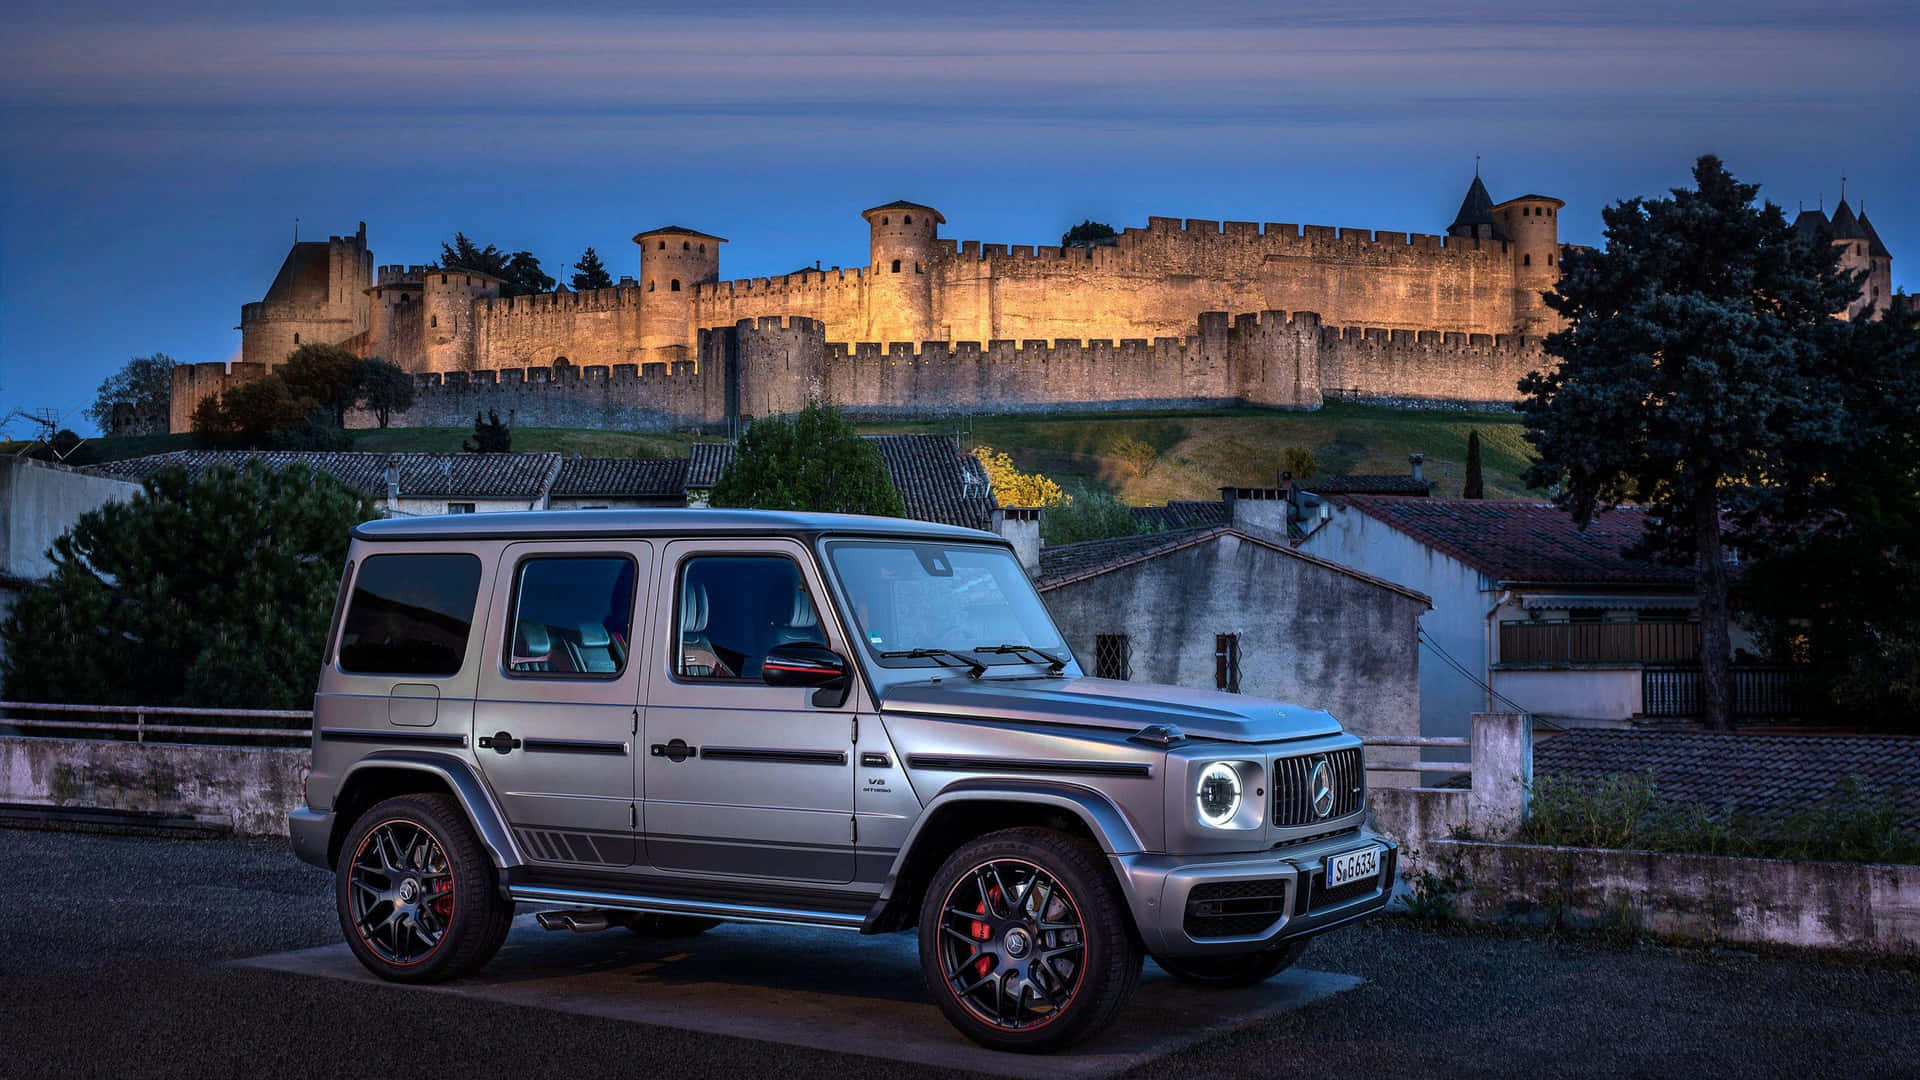 Mercedes G63 Castle Backdrop Wallpaper